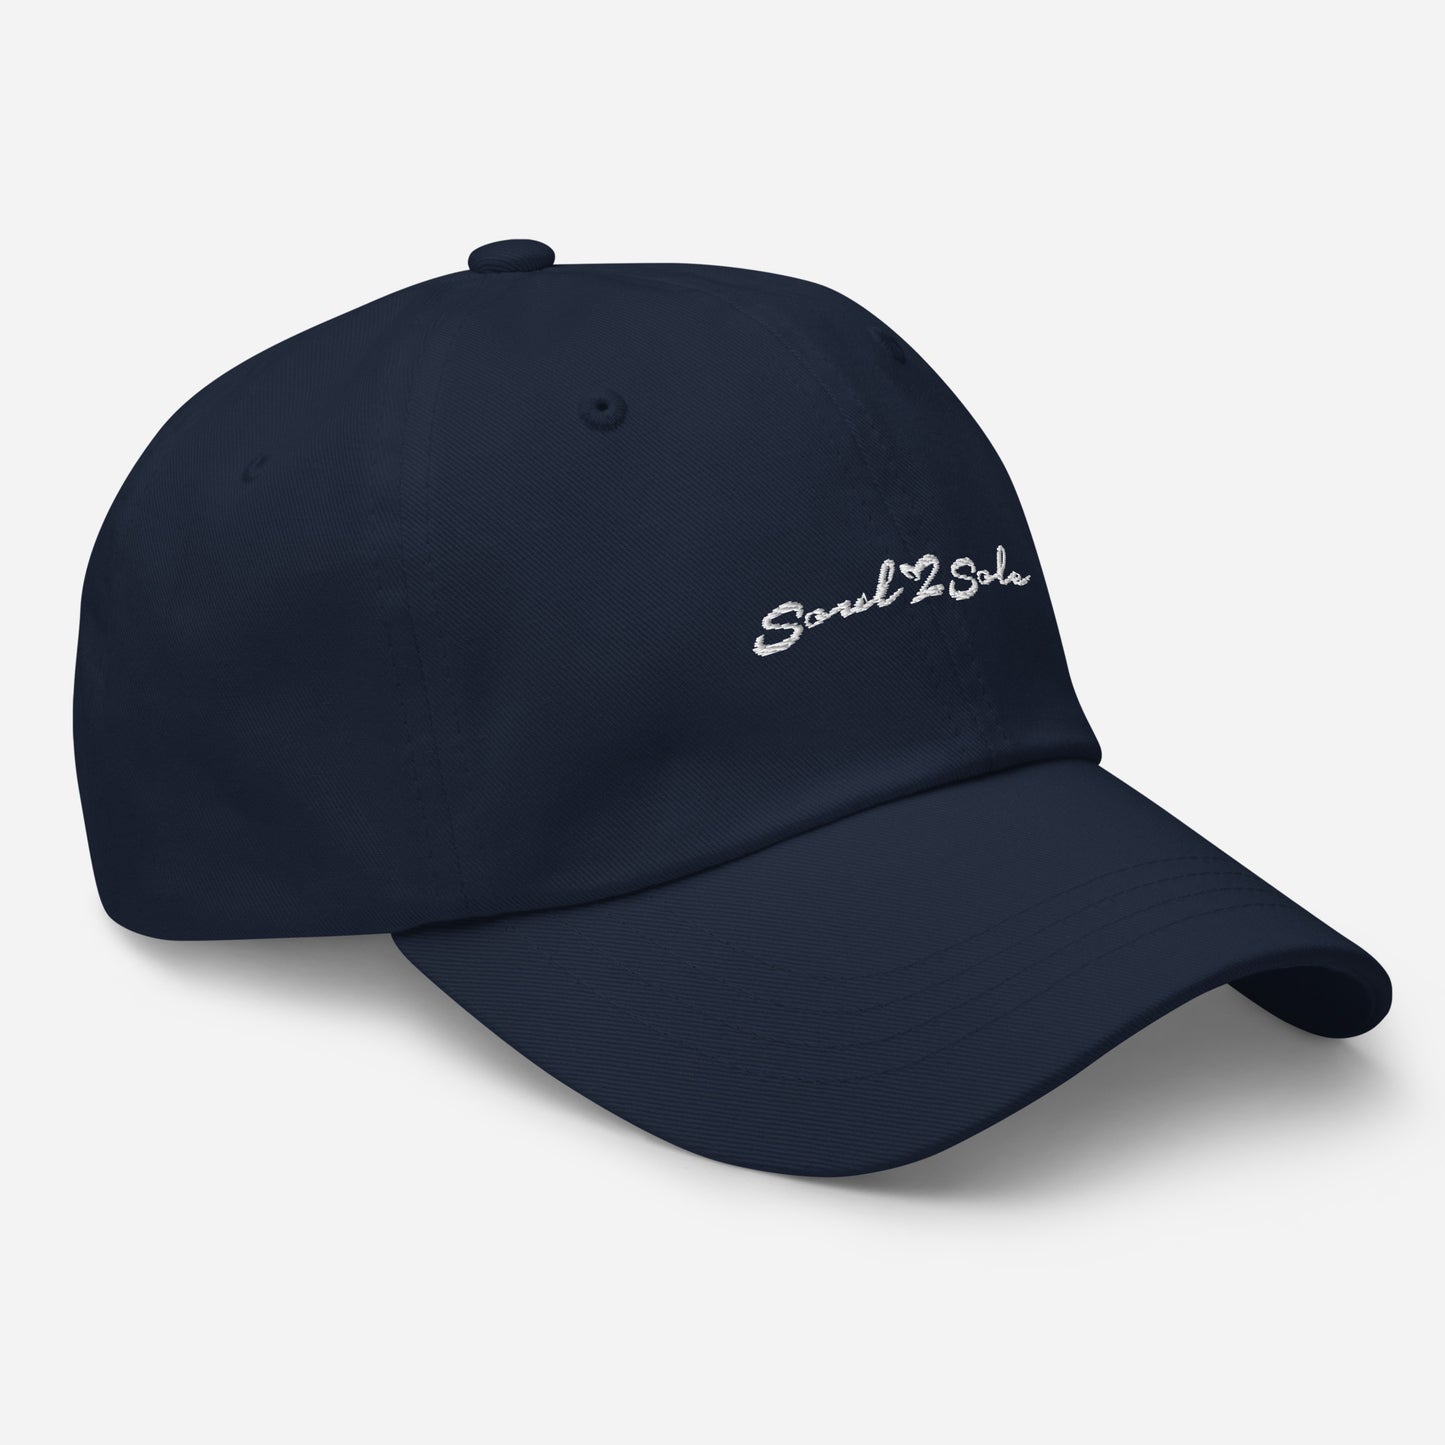 S2S Standard Hat